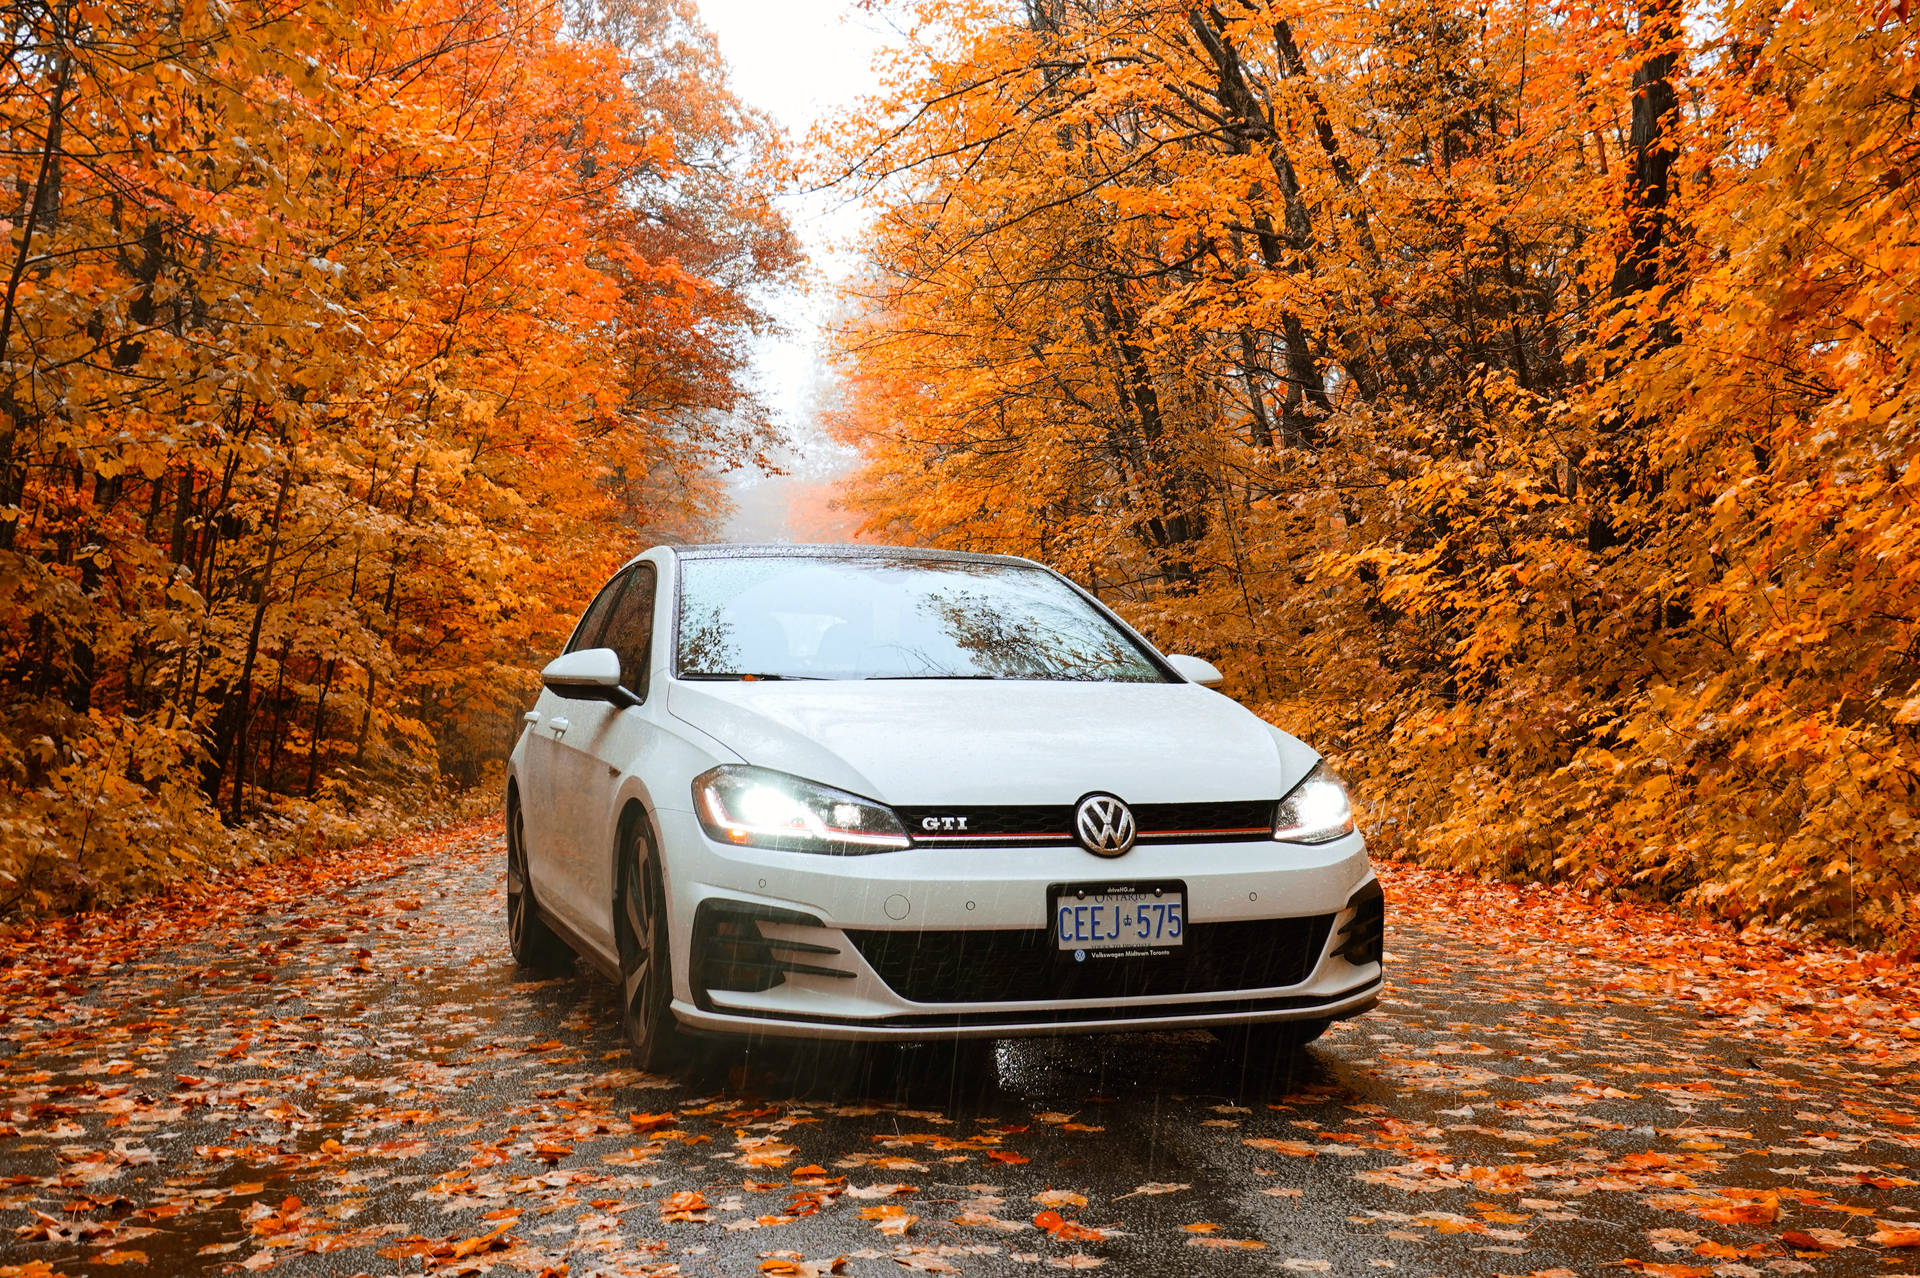 Volkswagen Golf GTI Mk7 In Autumn Wallpaper